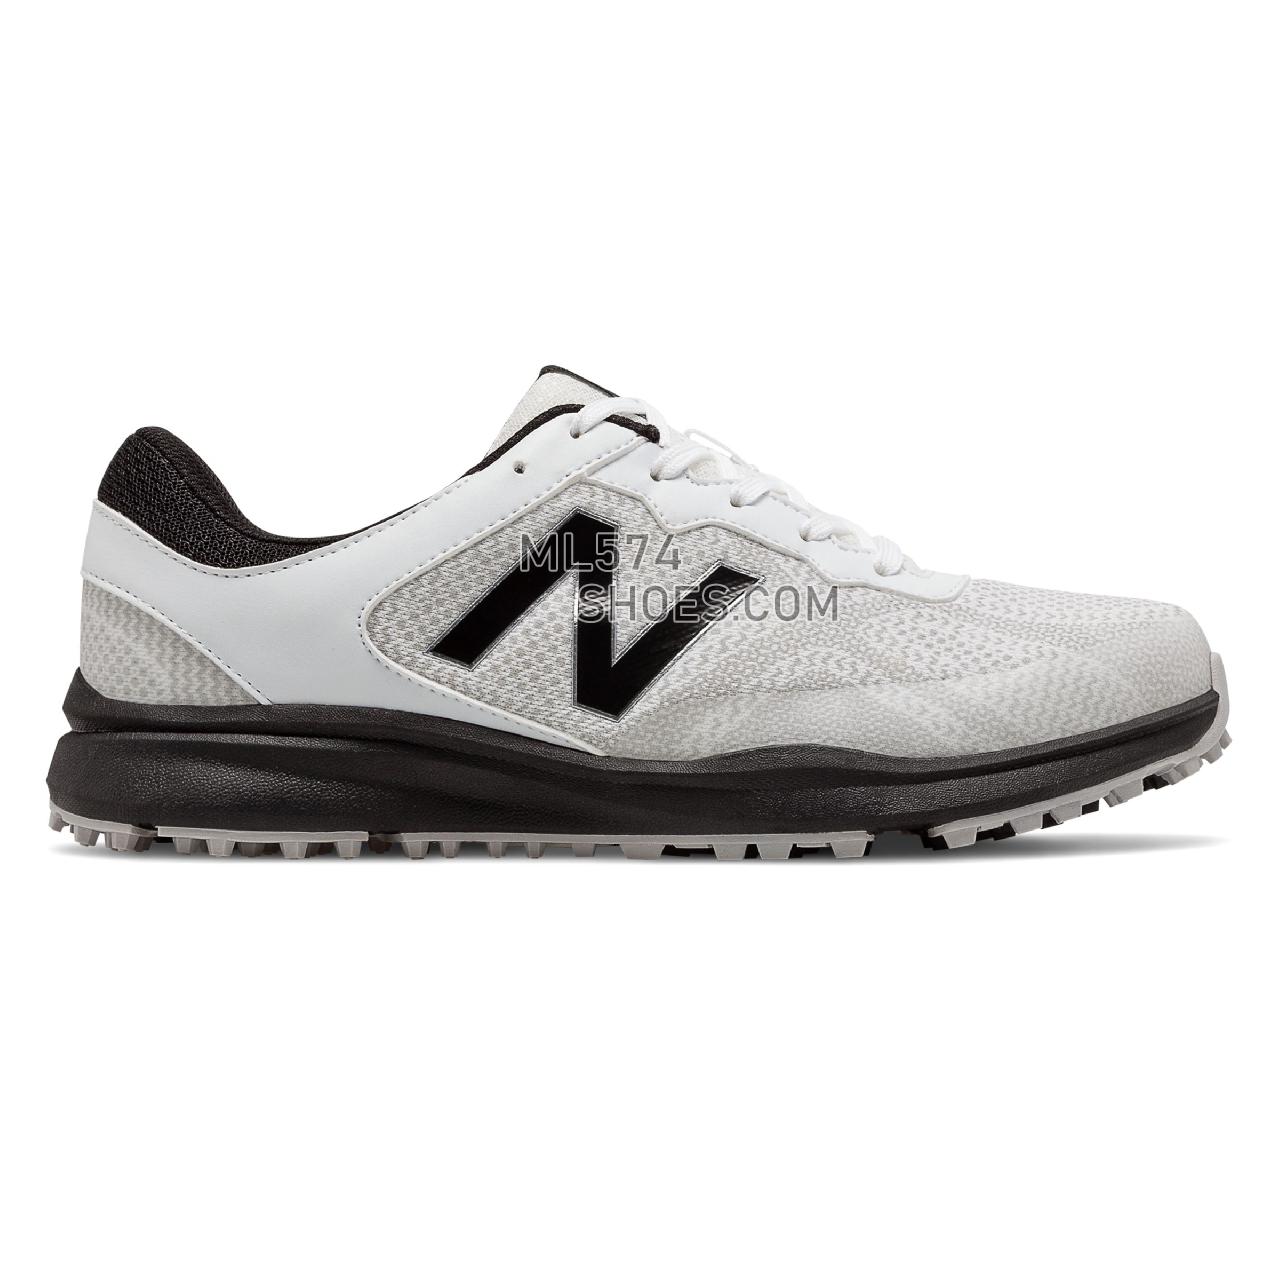 New Balance Breeze - Men's Golf - White with Black - NBG1801WK